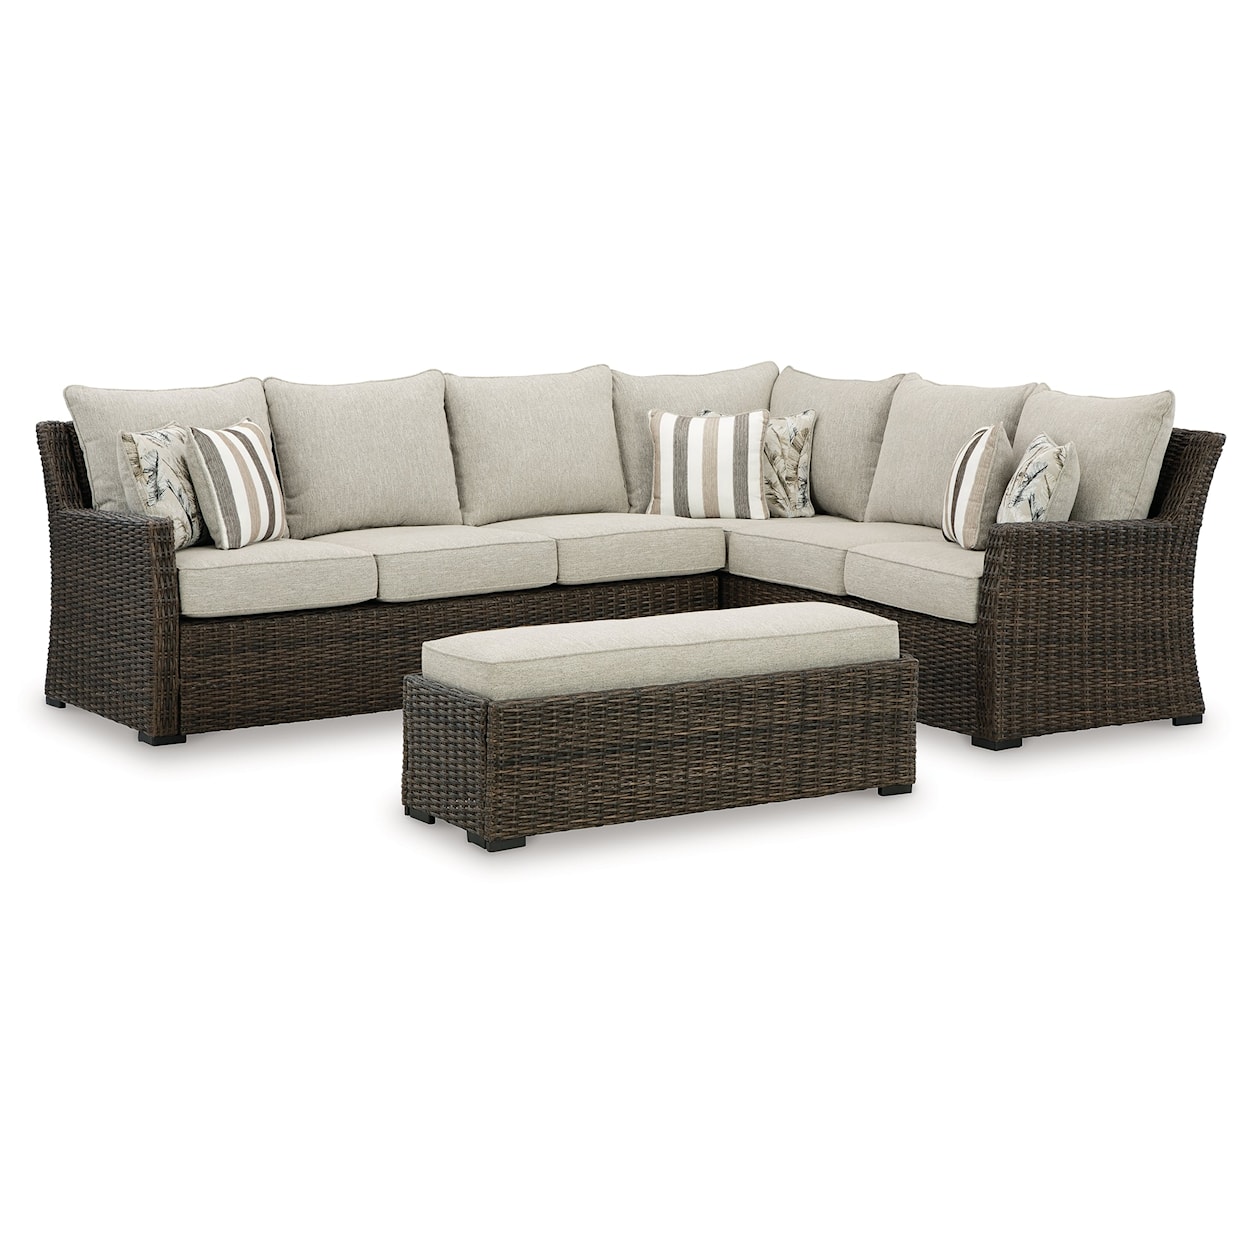 Ashley Furniture Signature Design Brook Ranch Sofa Sectional/Bench Set